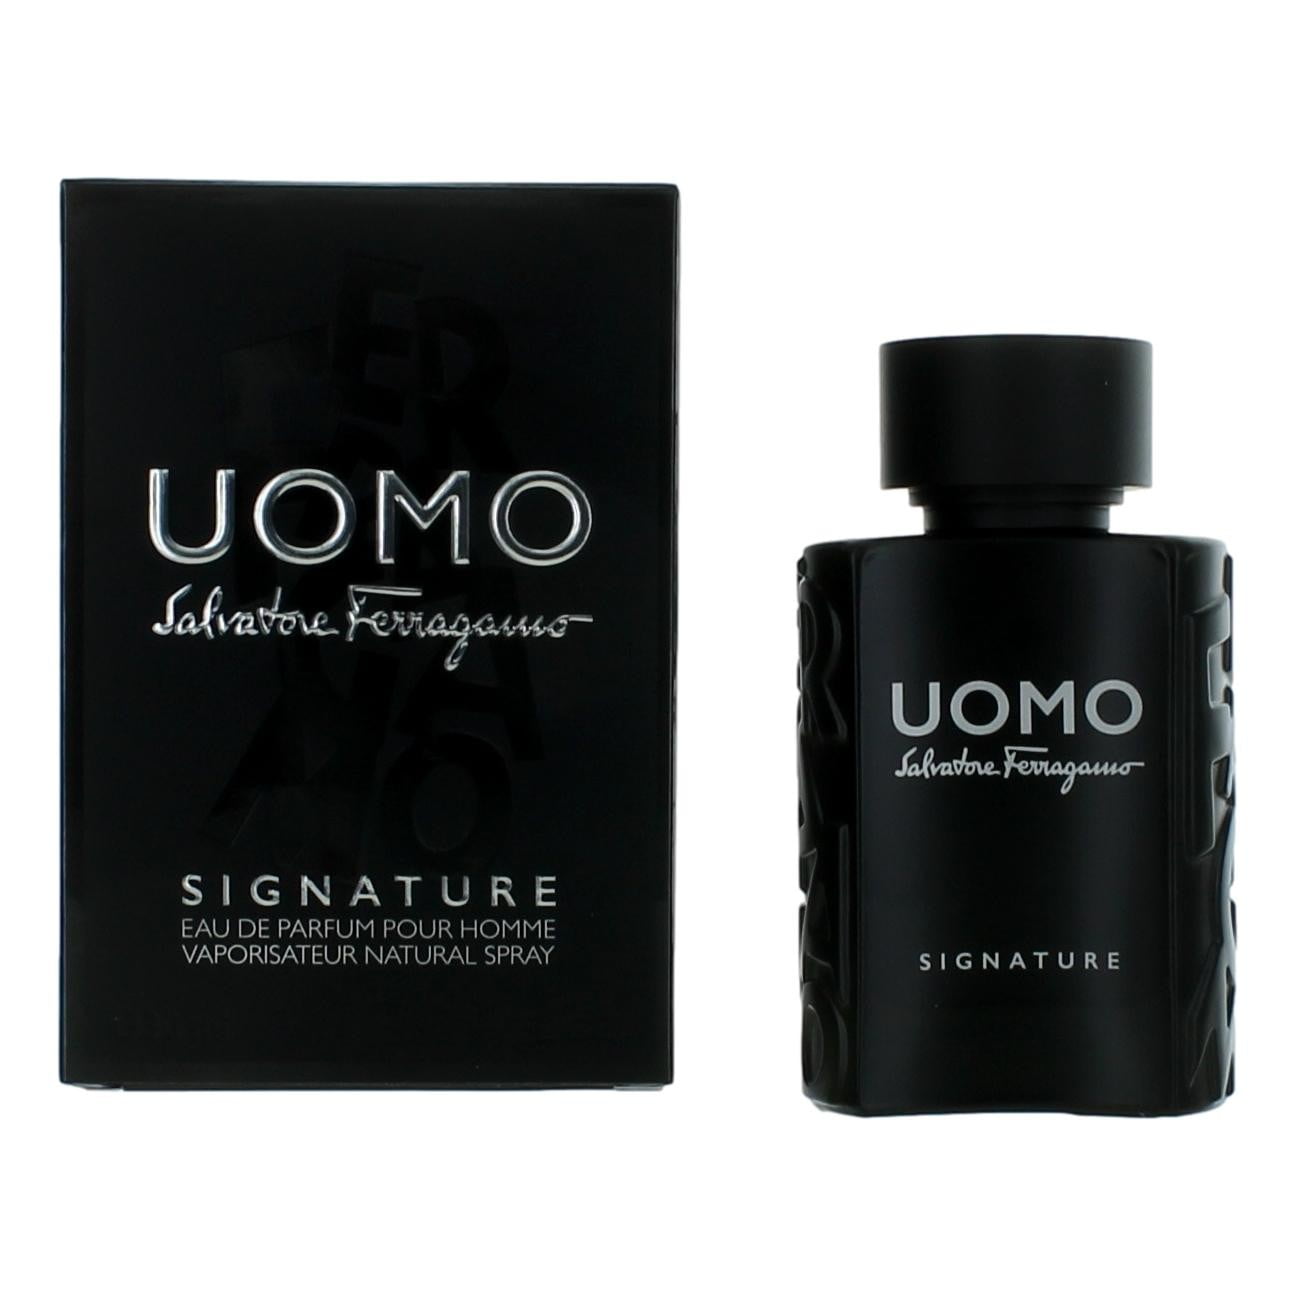  Salvatore Ferragamo Uomo Signature by Salvatore Ferragamo Eau  De Parfum Spray 1 oz Men : Beauty & Personal Care